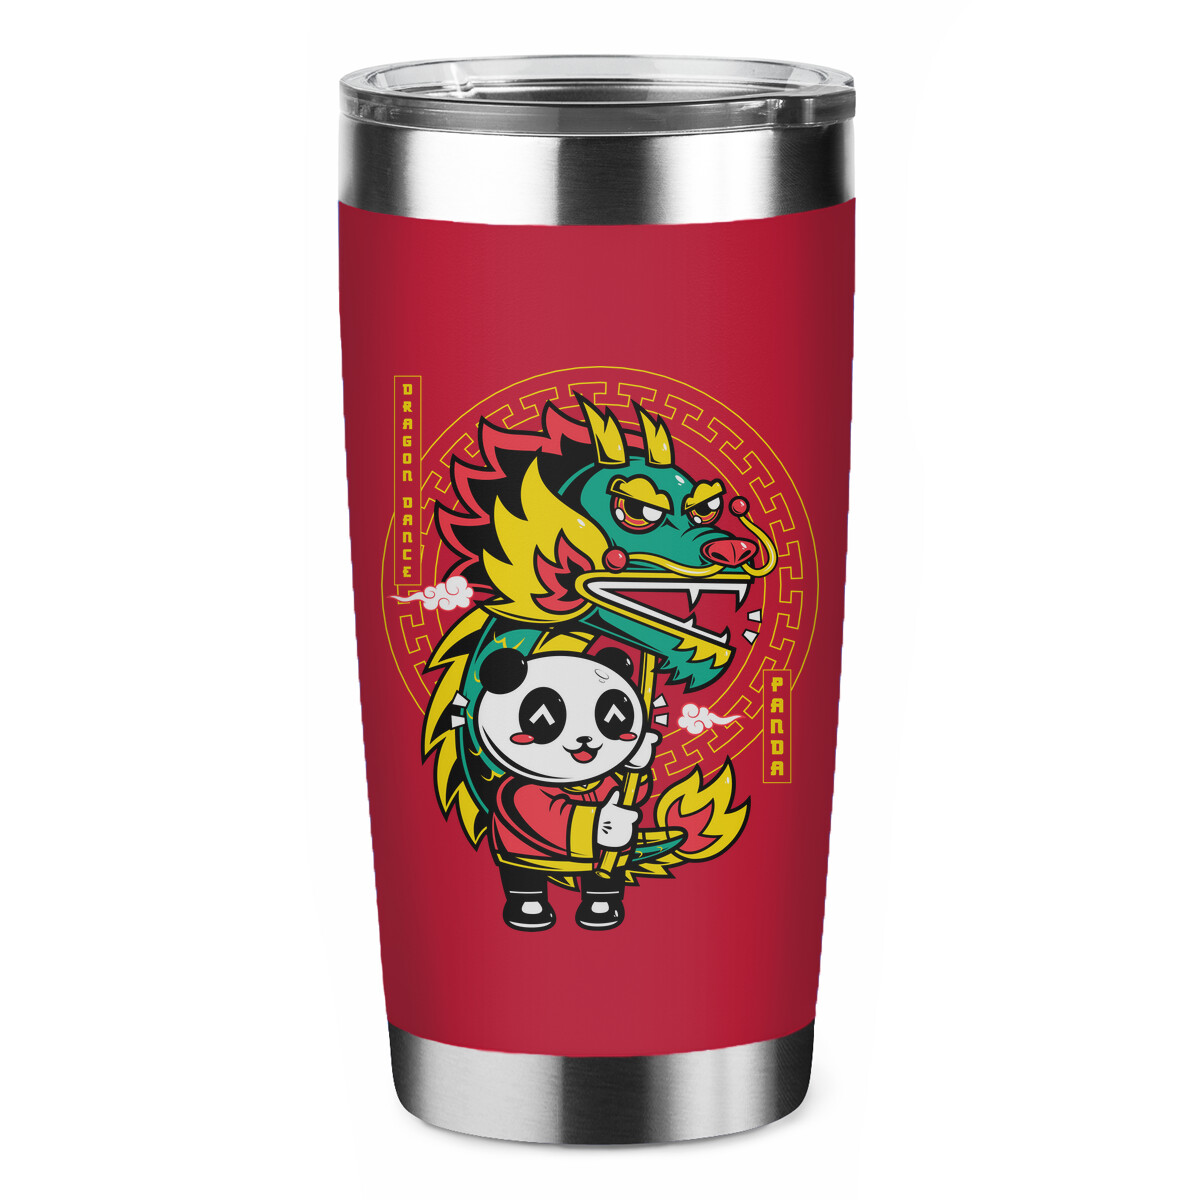 THE DAILY | “Dragon Dance Panda” by #krisren28 starts at just $13 today only at #TeeFury! ⚡
loom.ly/hO8nAi0

#animemerch #teefury #instaartist #dragonlegend #folklore #magical #mythology #fire #panda #kawaii #newyear #chinesenewyear #happynewyear #celebration #holiday